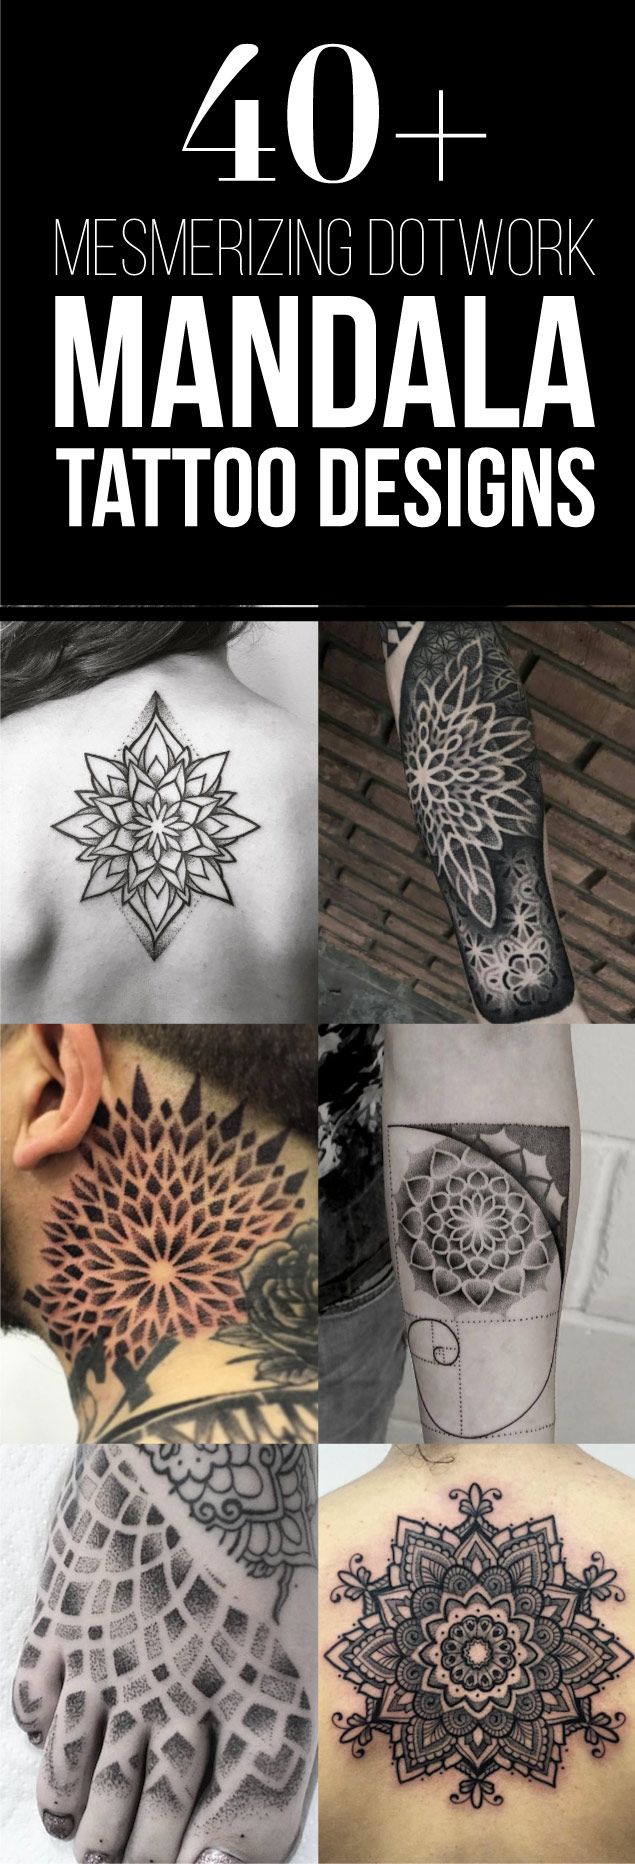 Tattoo ideas; the new trends in tattoos - Avantgarde Tattoo Barcelona